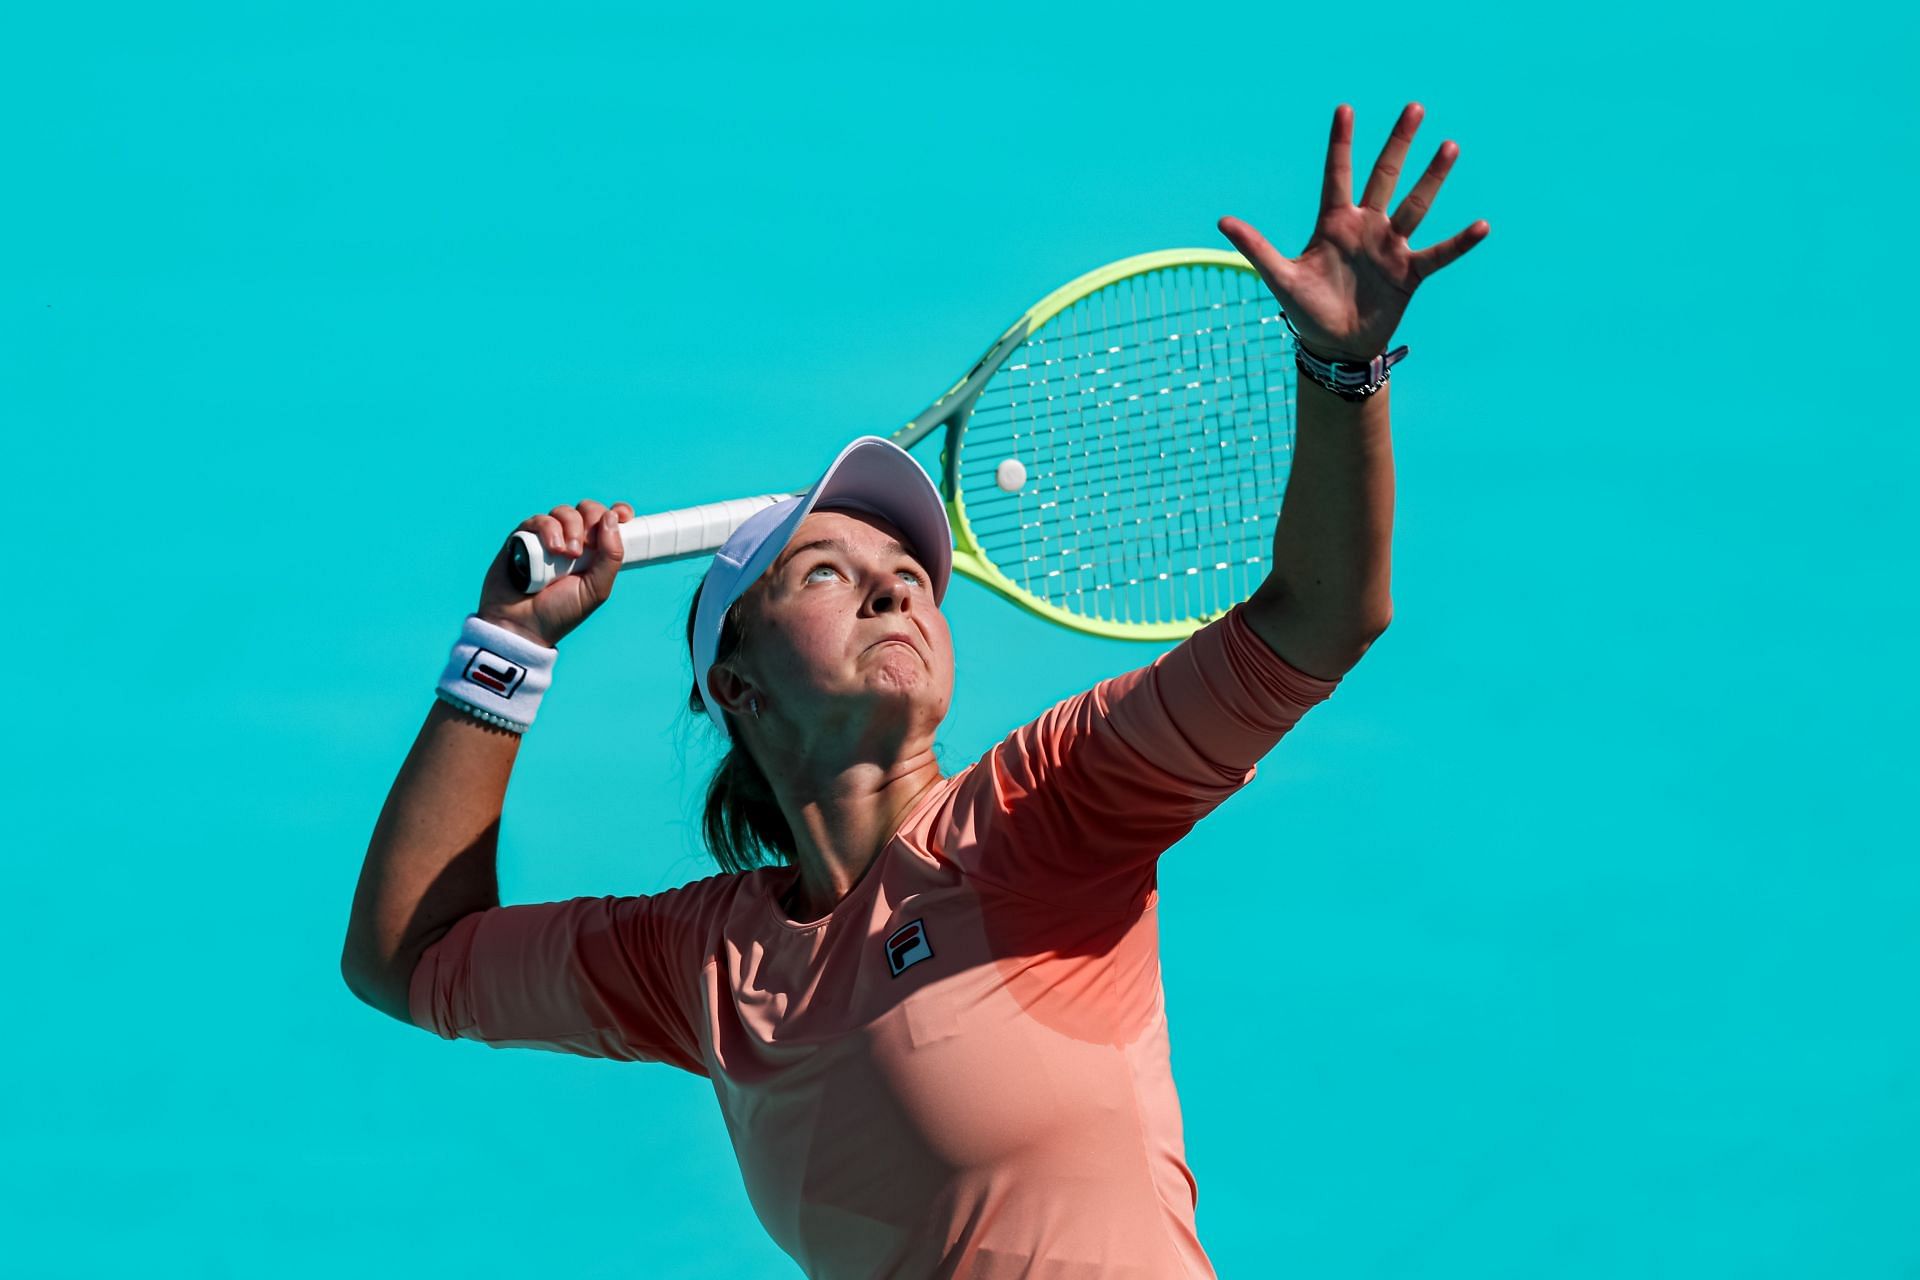 Barbora Krejcikova in action at the Abu Dhabi Open